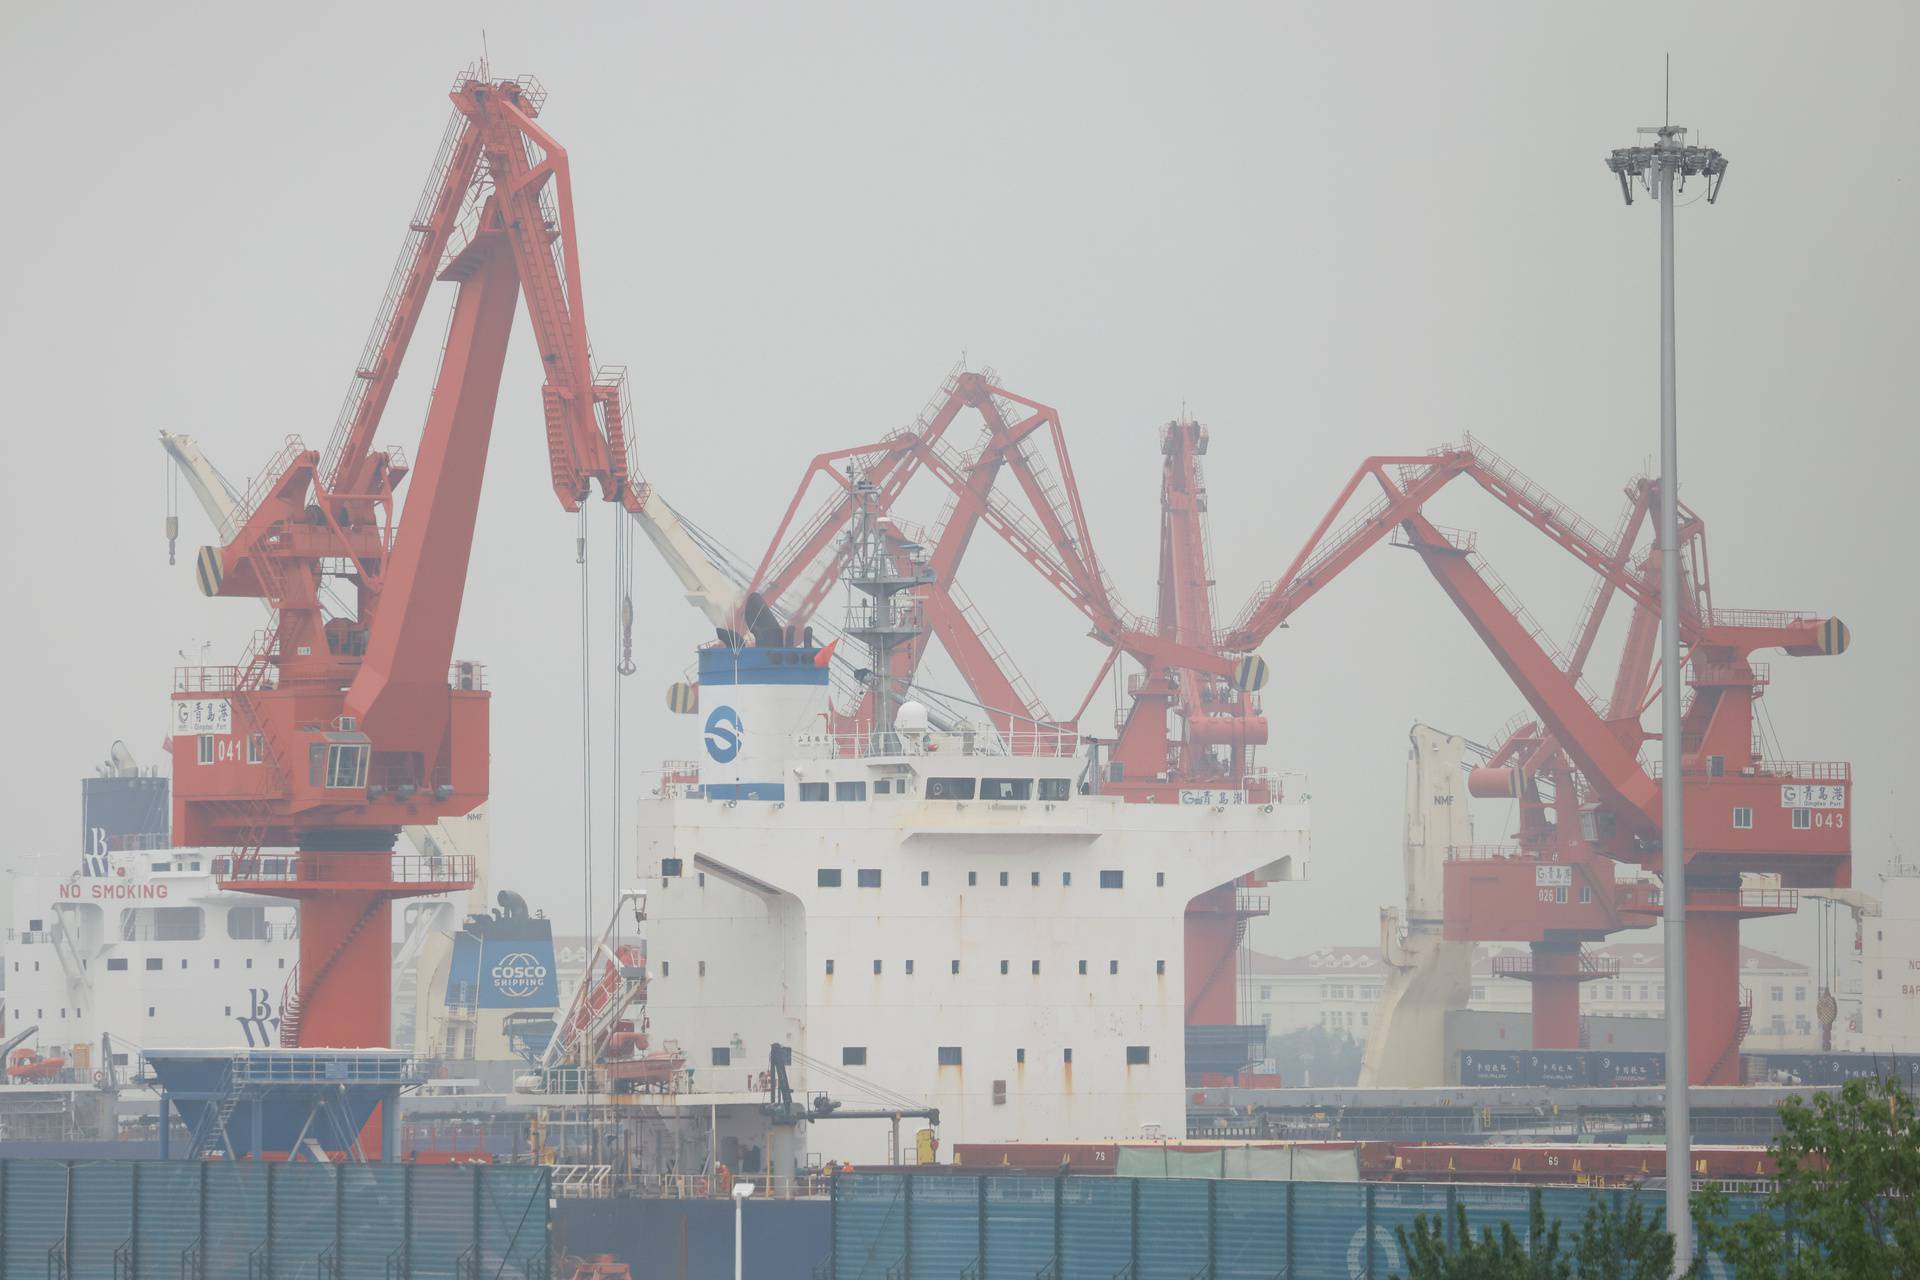 Cranes are seen at the port of Qingdao